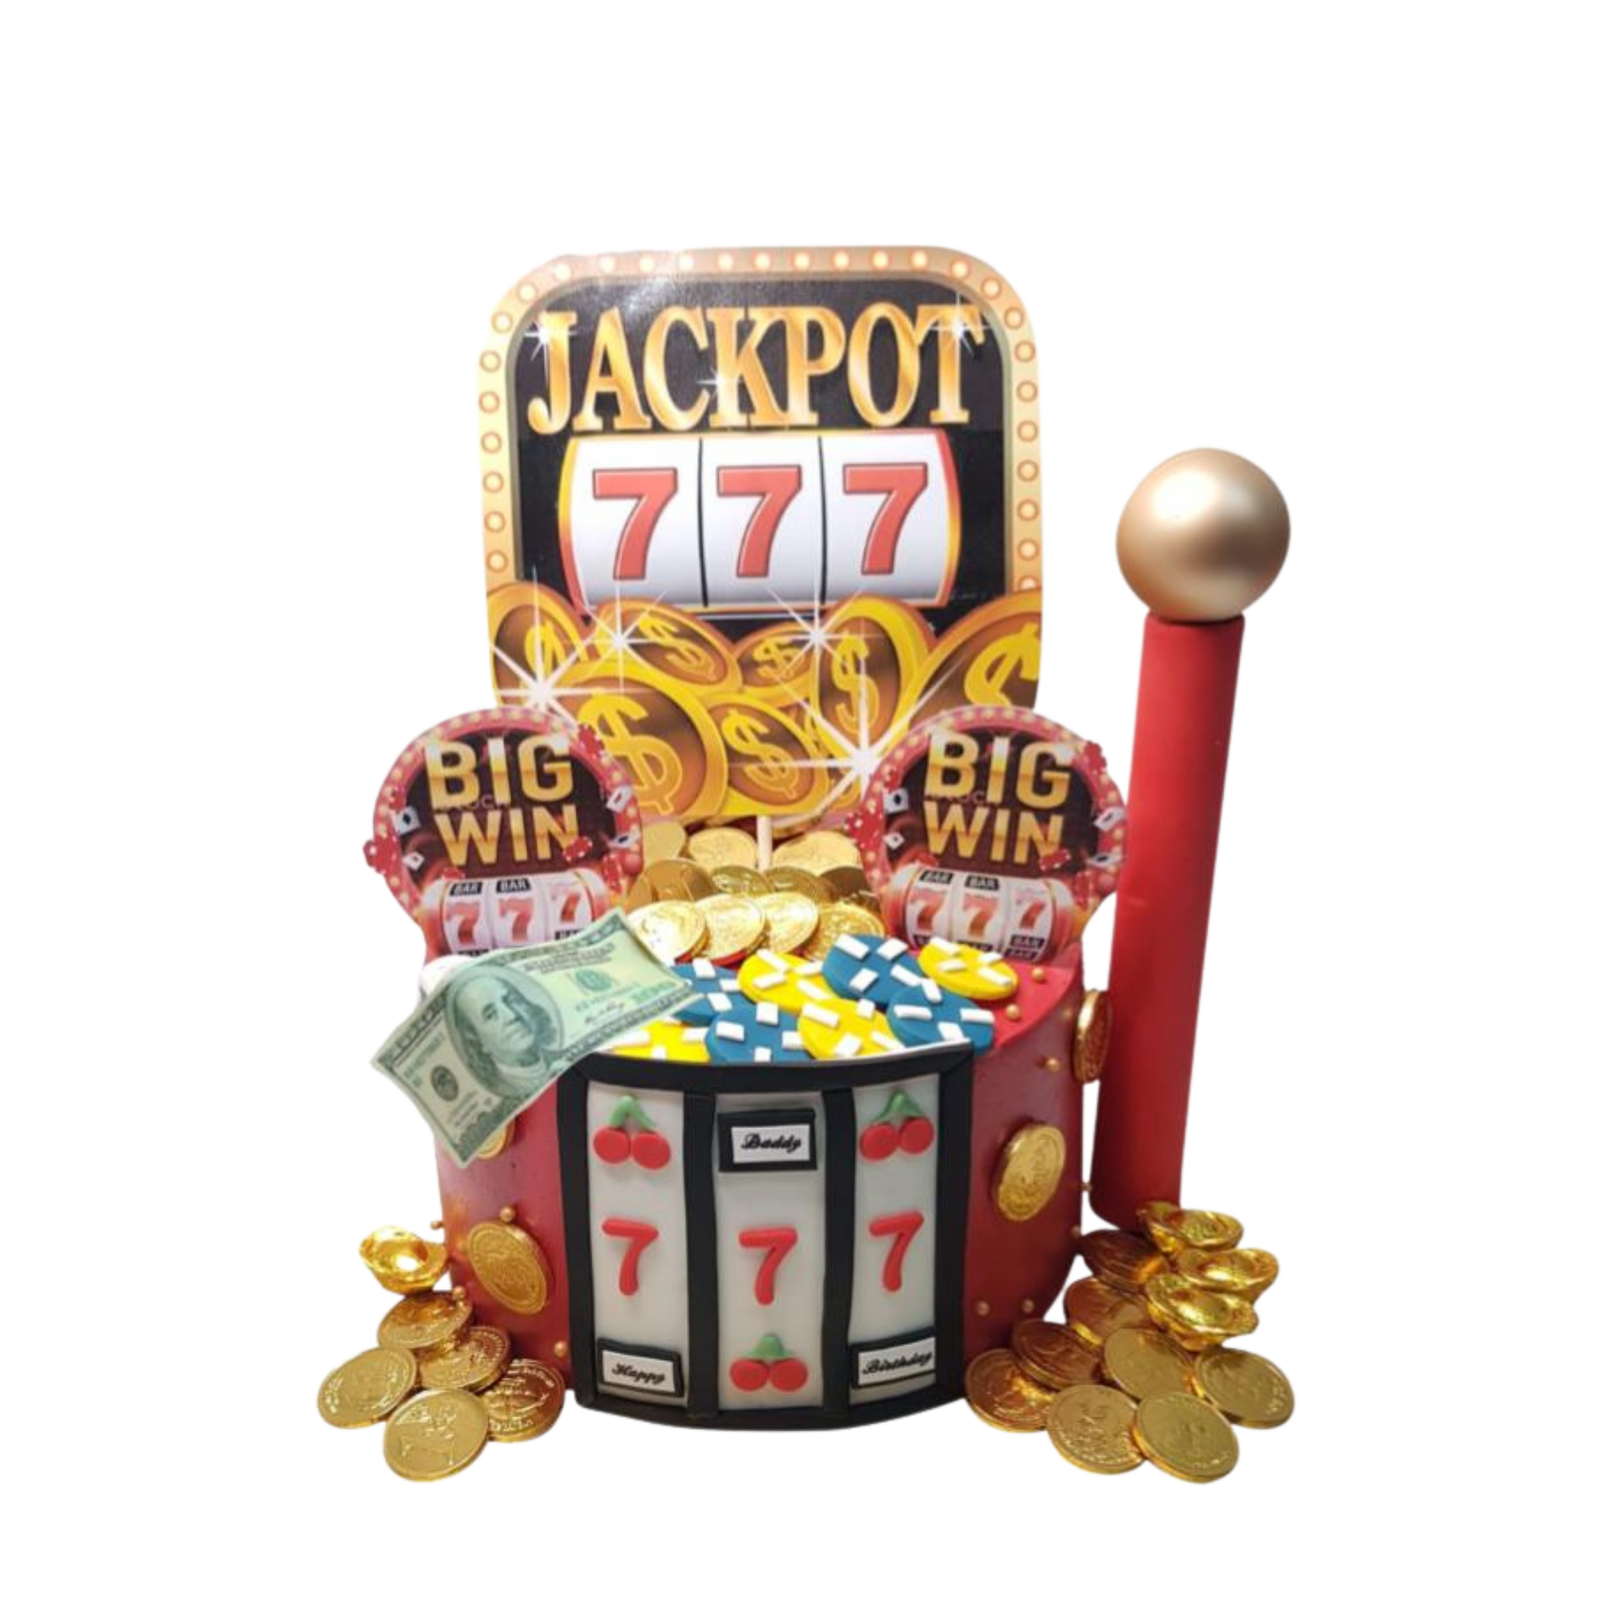 Jackpot Slot Machine Casino theme for BIG WIN super nice details cake art  #singaporecake #jackpotcake #casinocake #mancake #slotmachine #3dcake, Food  & Drinks, Homemade Bakes on Carousell